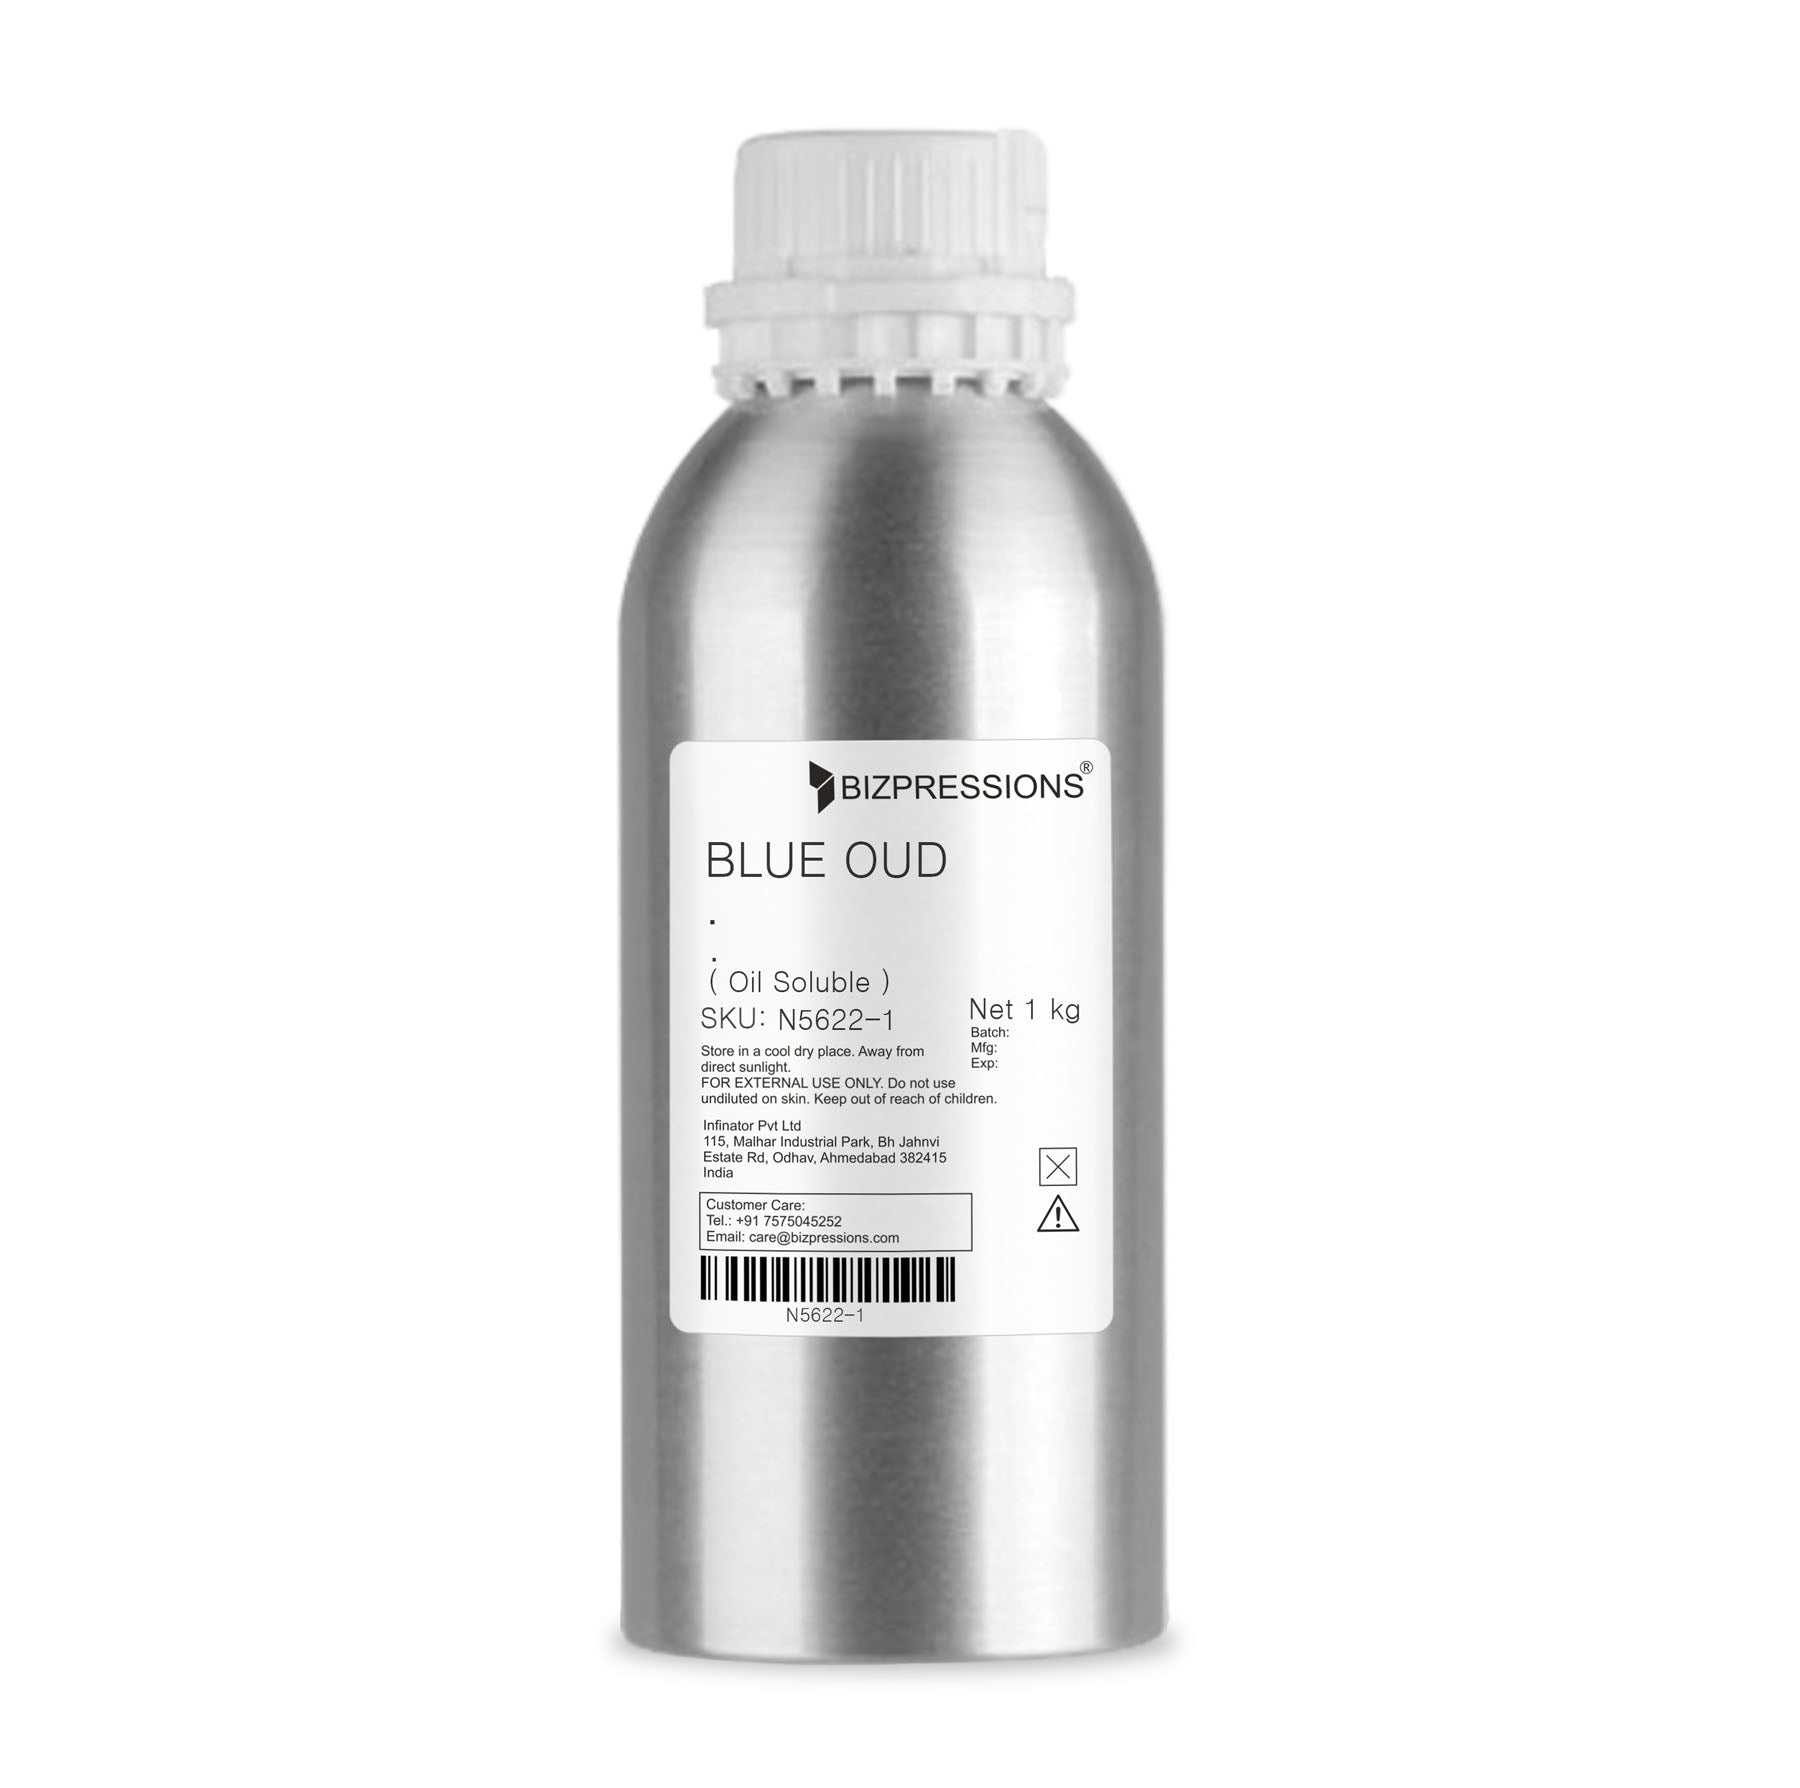 BLUE OUD - Fragrance ( Oil Soluble ) - 1 kg